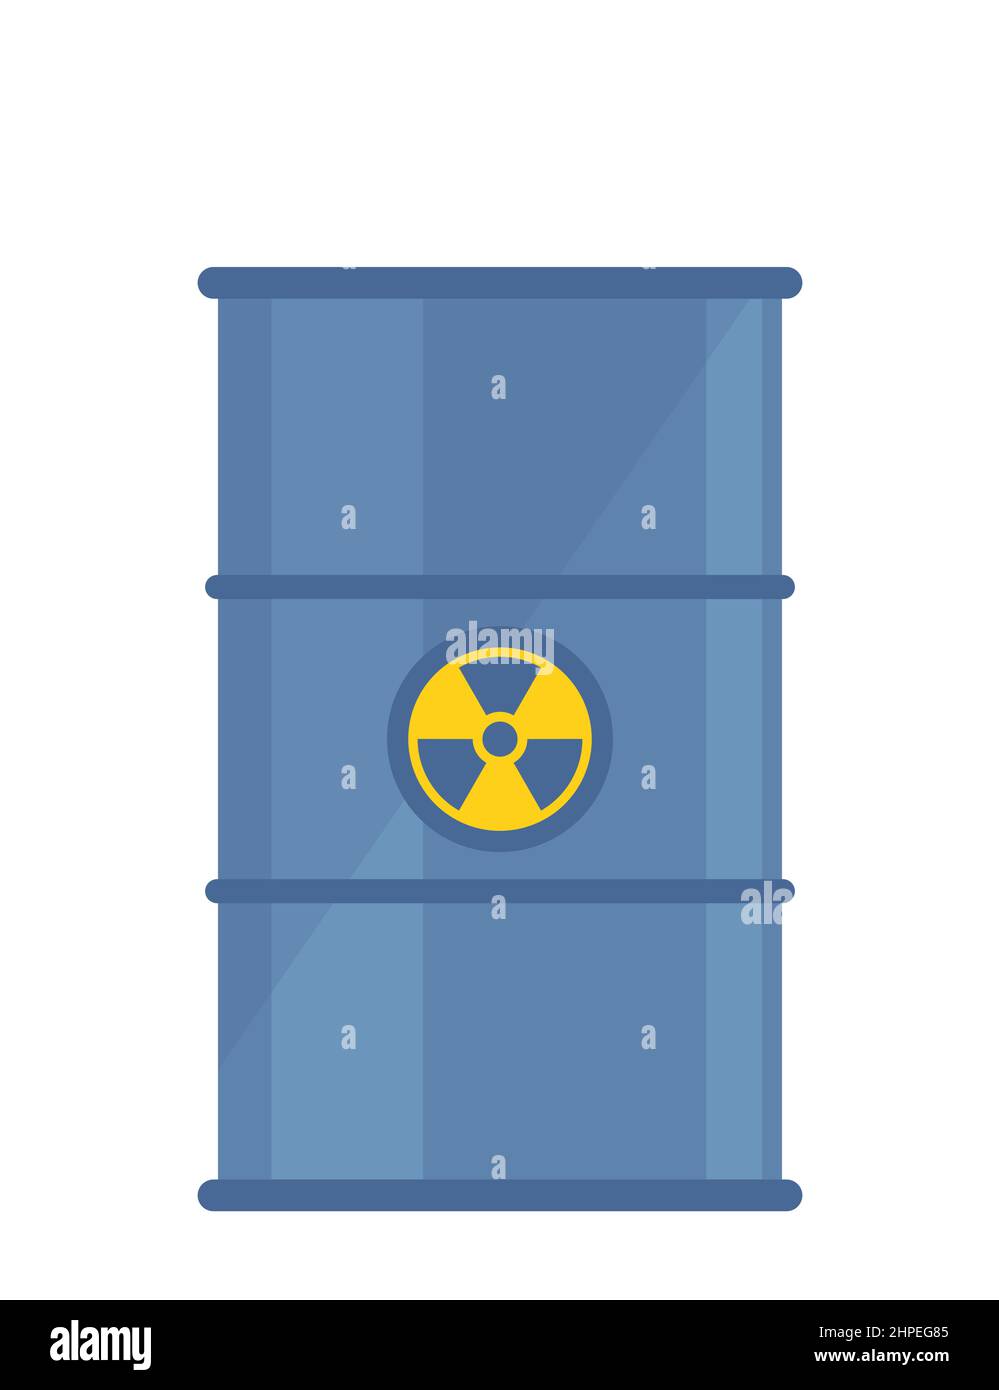 Radioactive waste in barrel. Barrel with radioactive hazard icon on it. Ecology, environmental pollution, waste. Flat style vector illustration Stock Vector